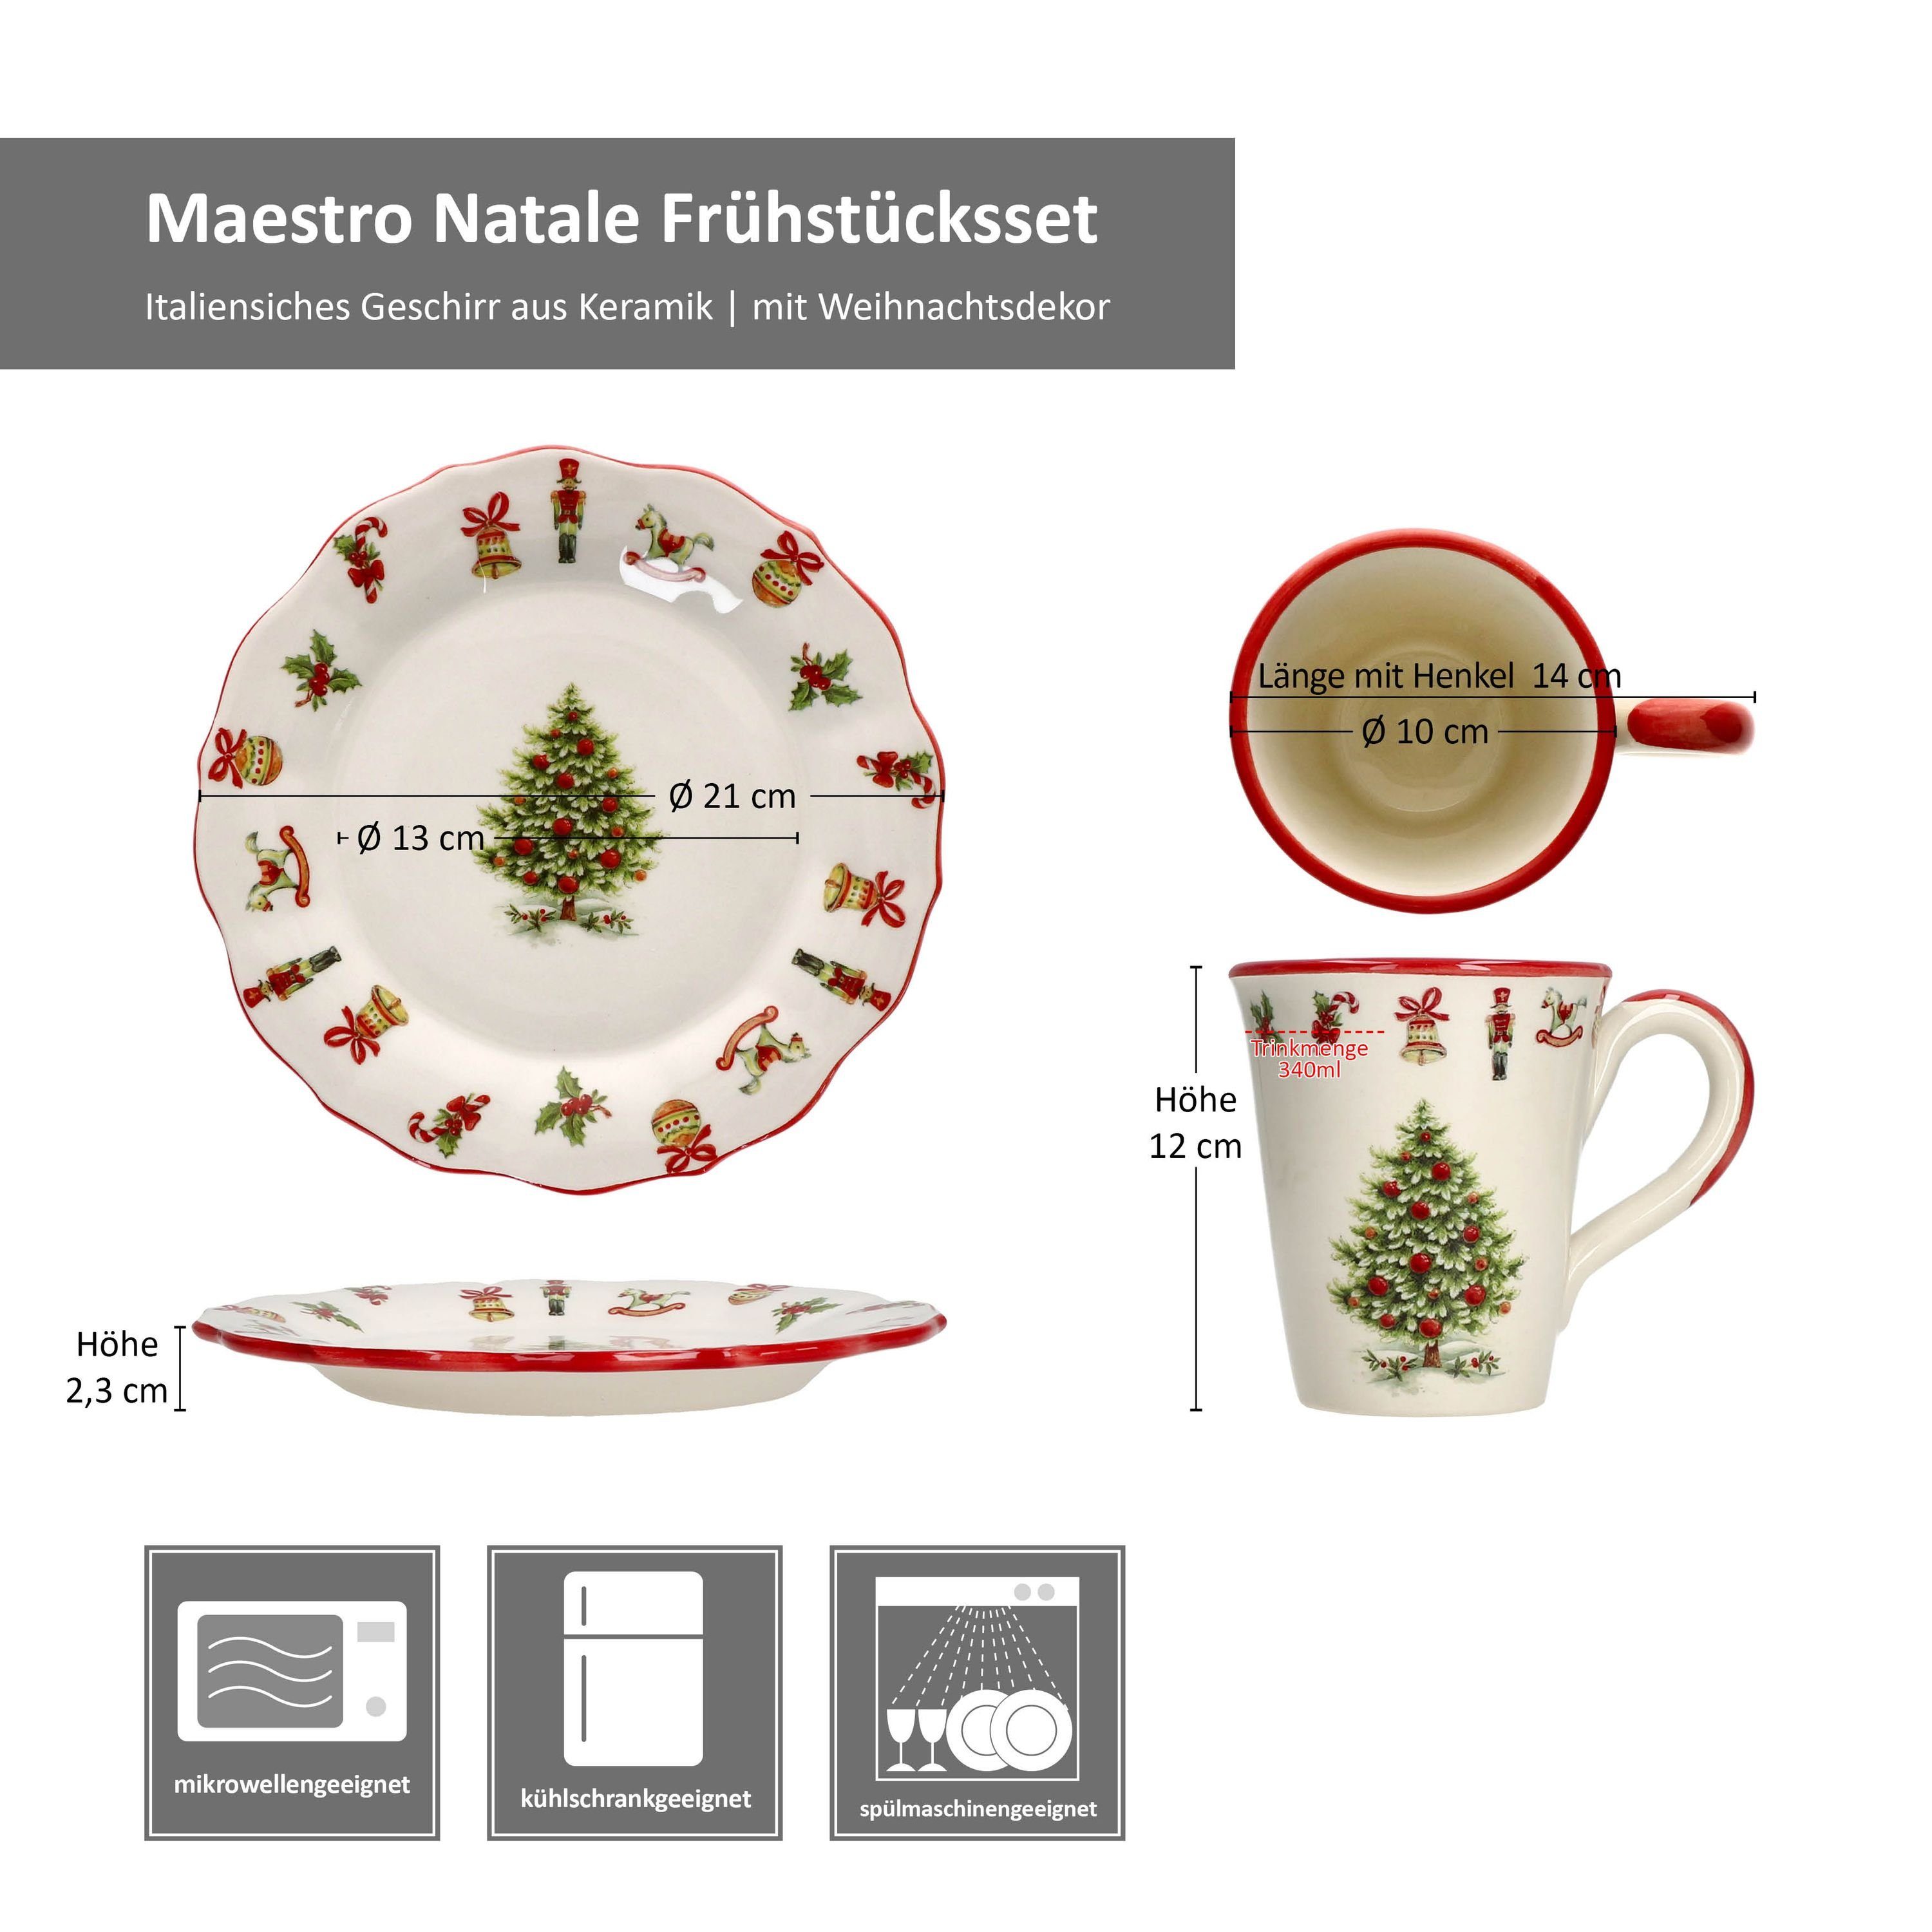 Frühstücks-Geschirrset Maestro 4tlg Teller 2 Natale Keramik Weihnachten, Keramik Frühstücksset Pers MamboCat